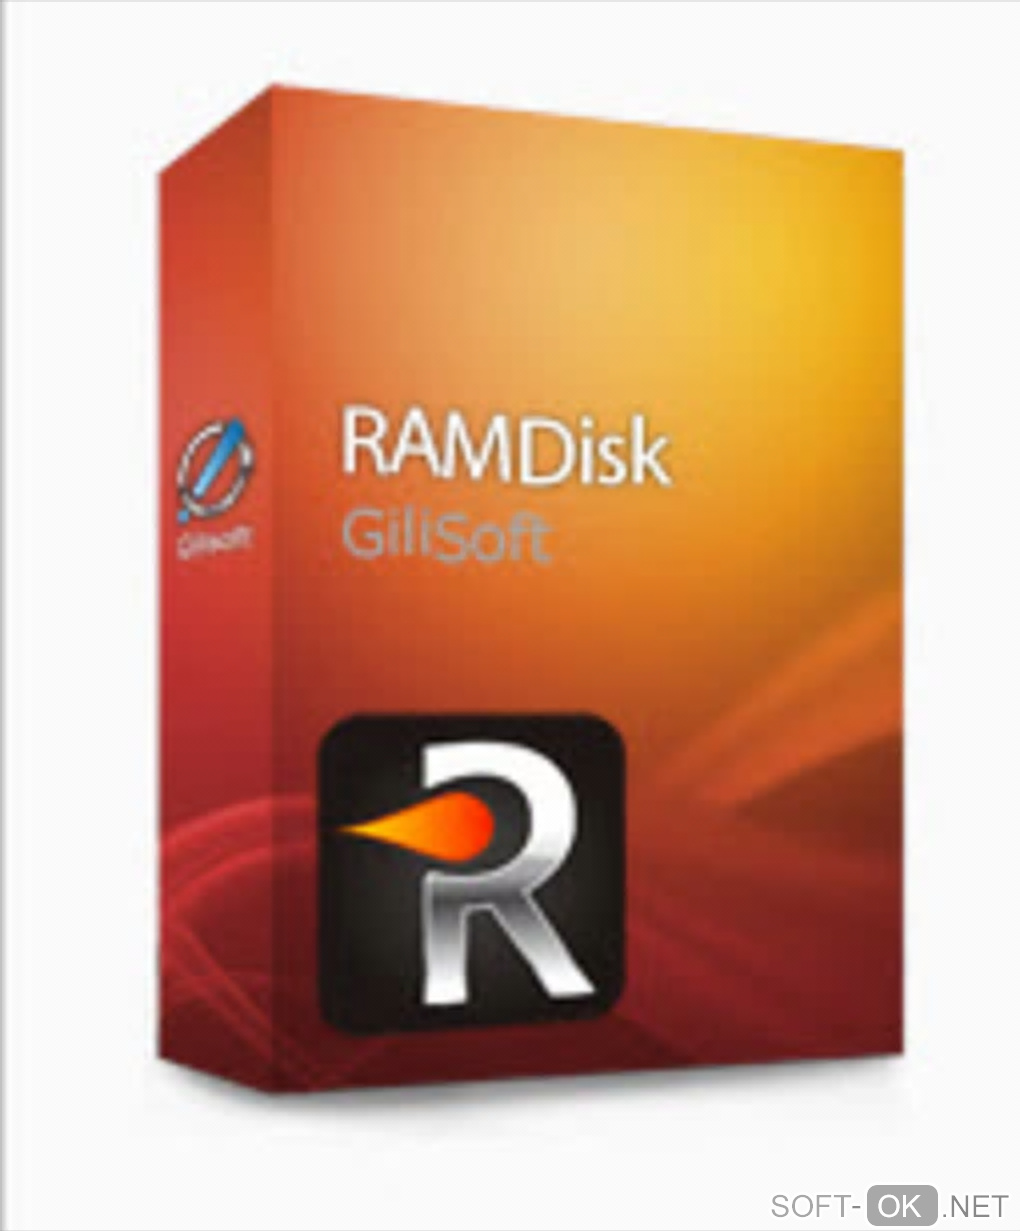 The appearance "GiliSoft RAMDisk"